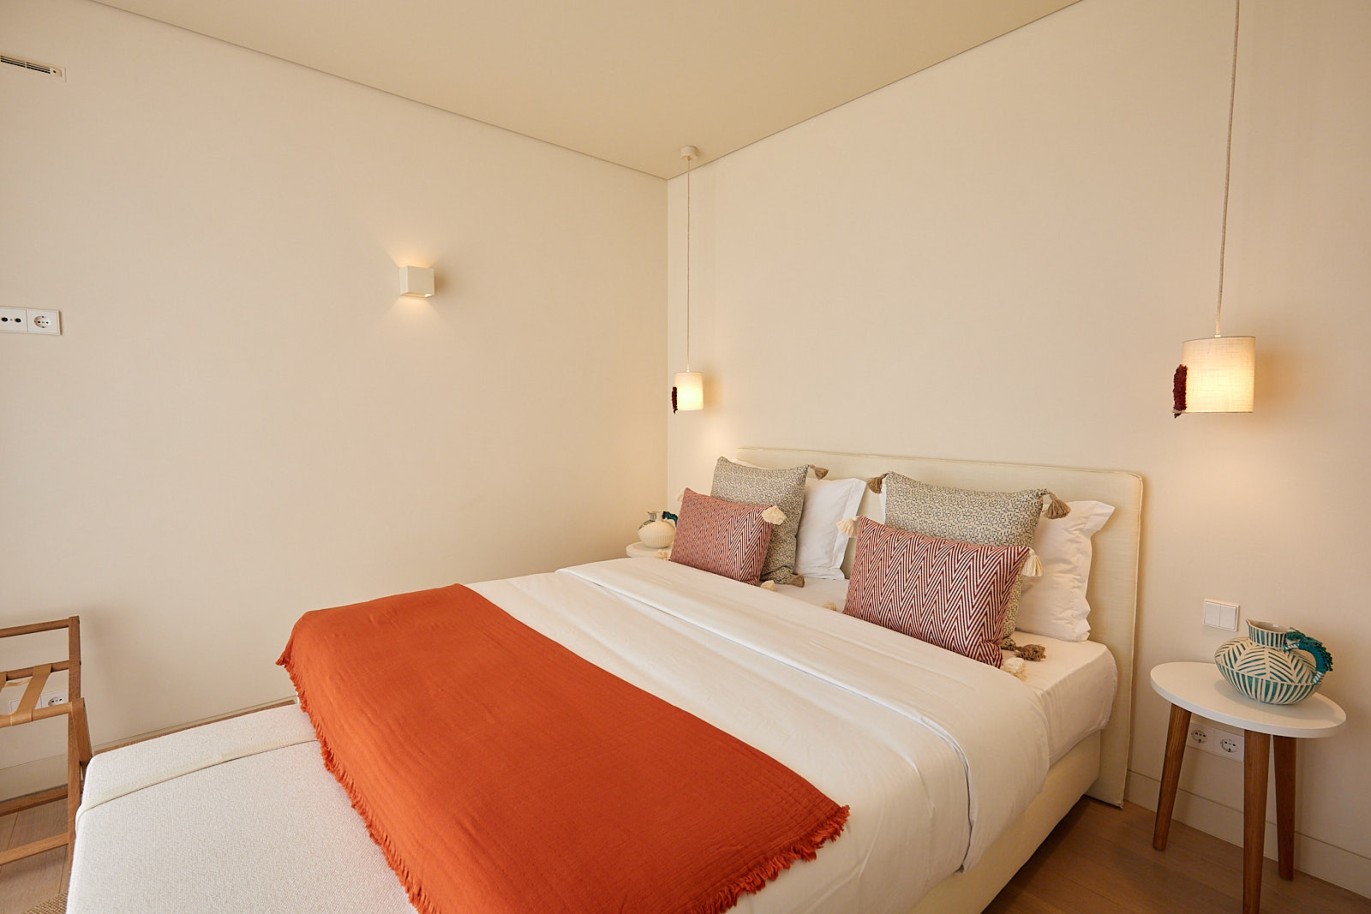 2 bedroom apartment in resort, for sale in Porches, Algarve_228724